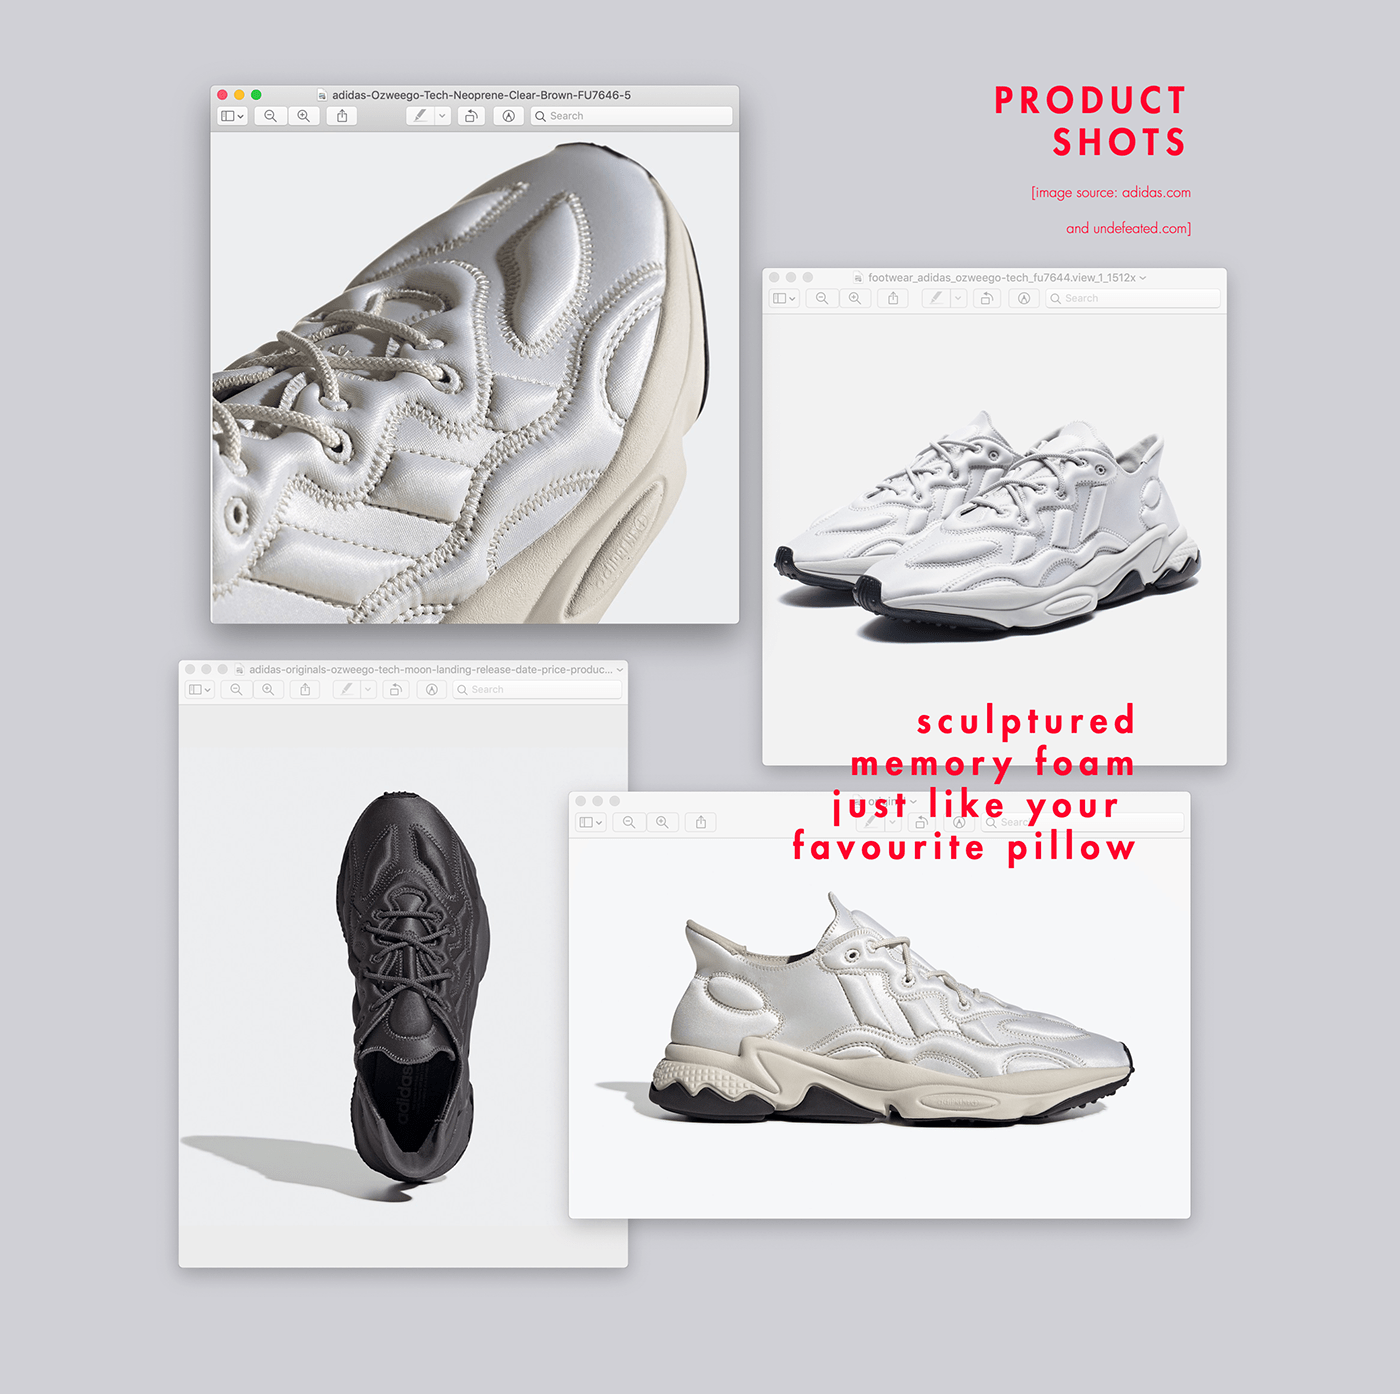 design footwear industrial design  kicks material ozweego Ozweego Tech product design  sneaker adidas